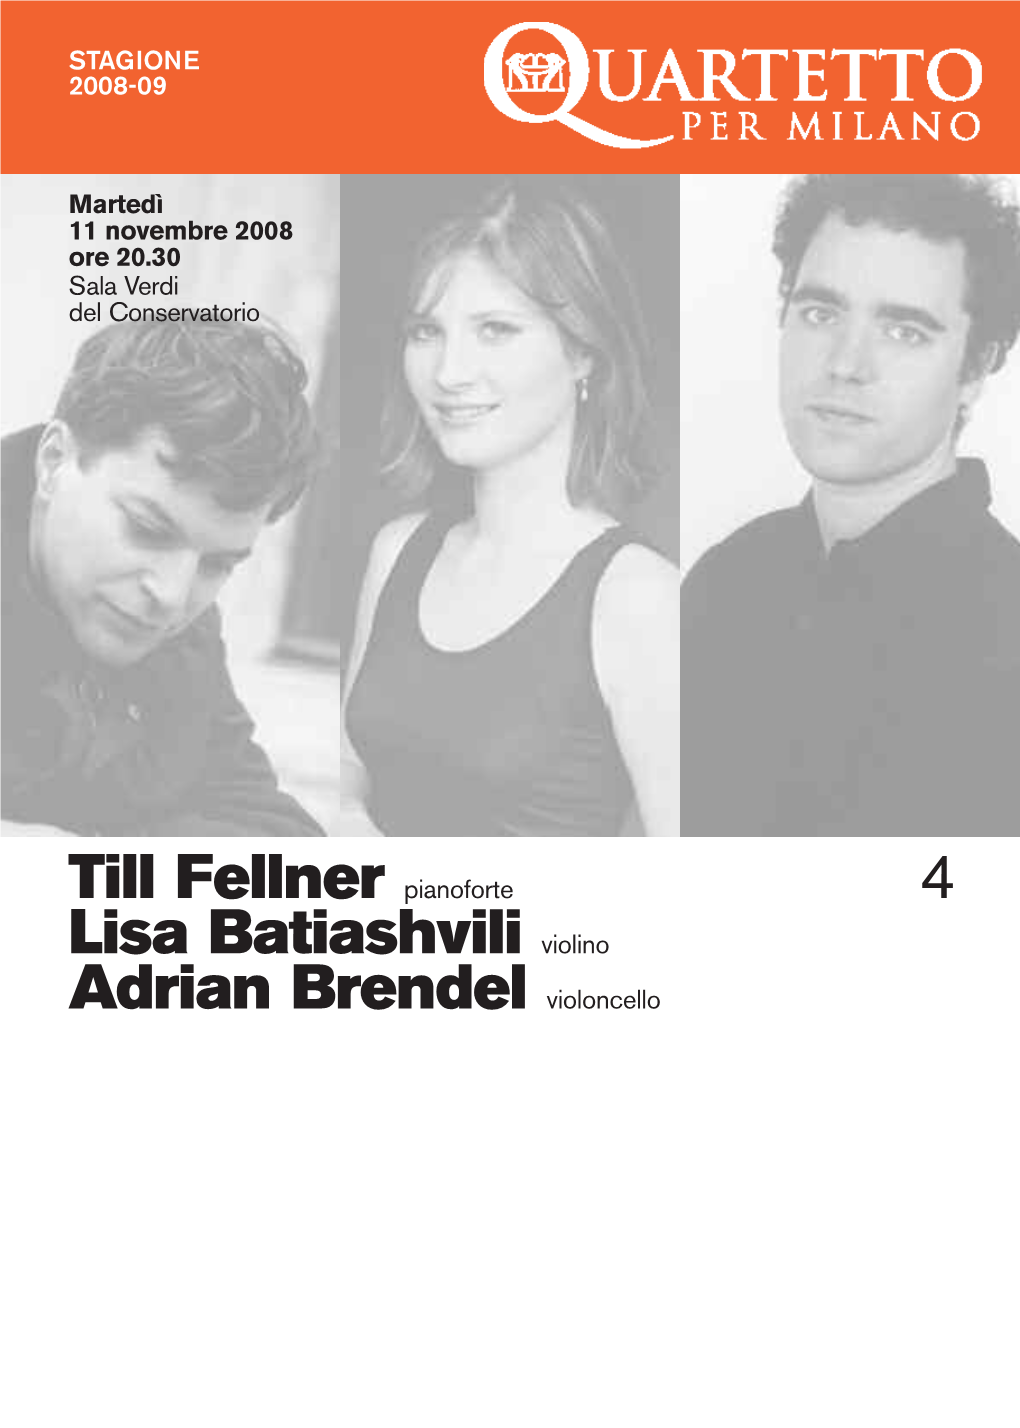 Till Fellner Pianoforte Lisa Batiashvili Violino Adrian Brendel Violoncello 4